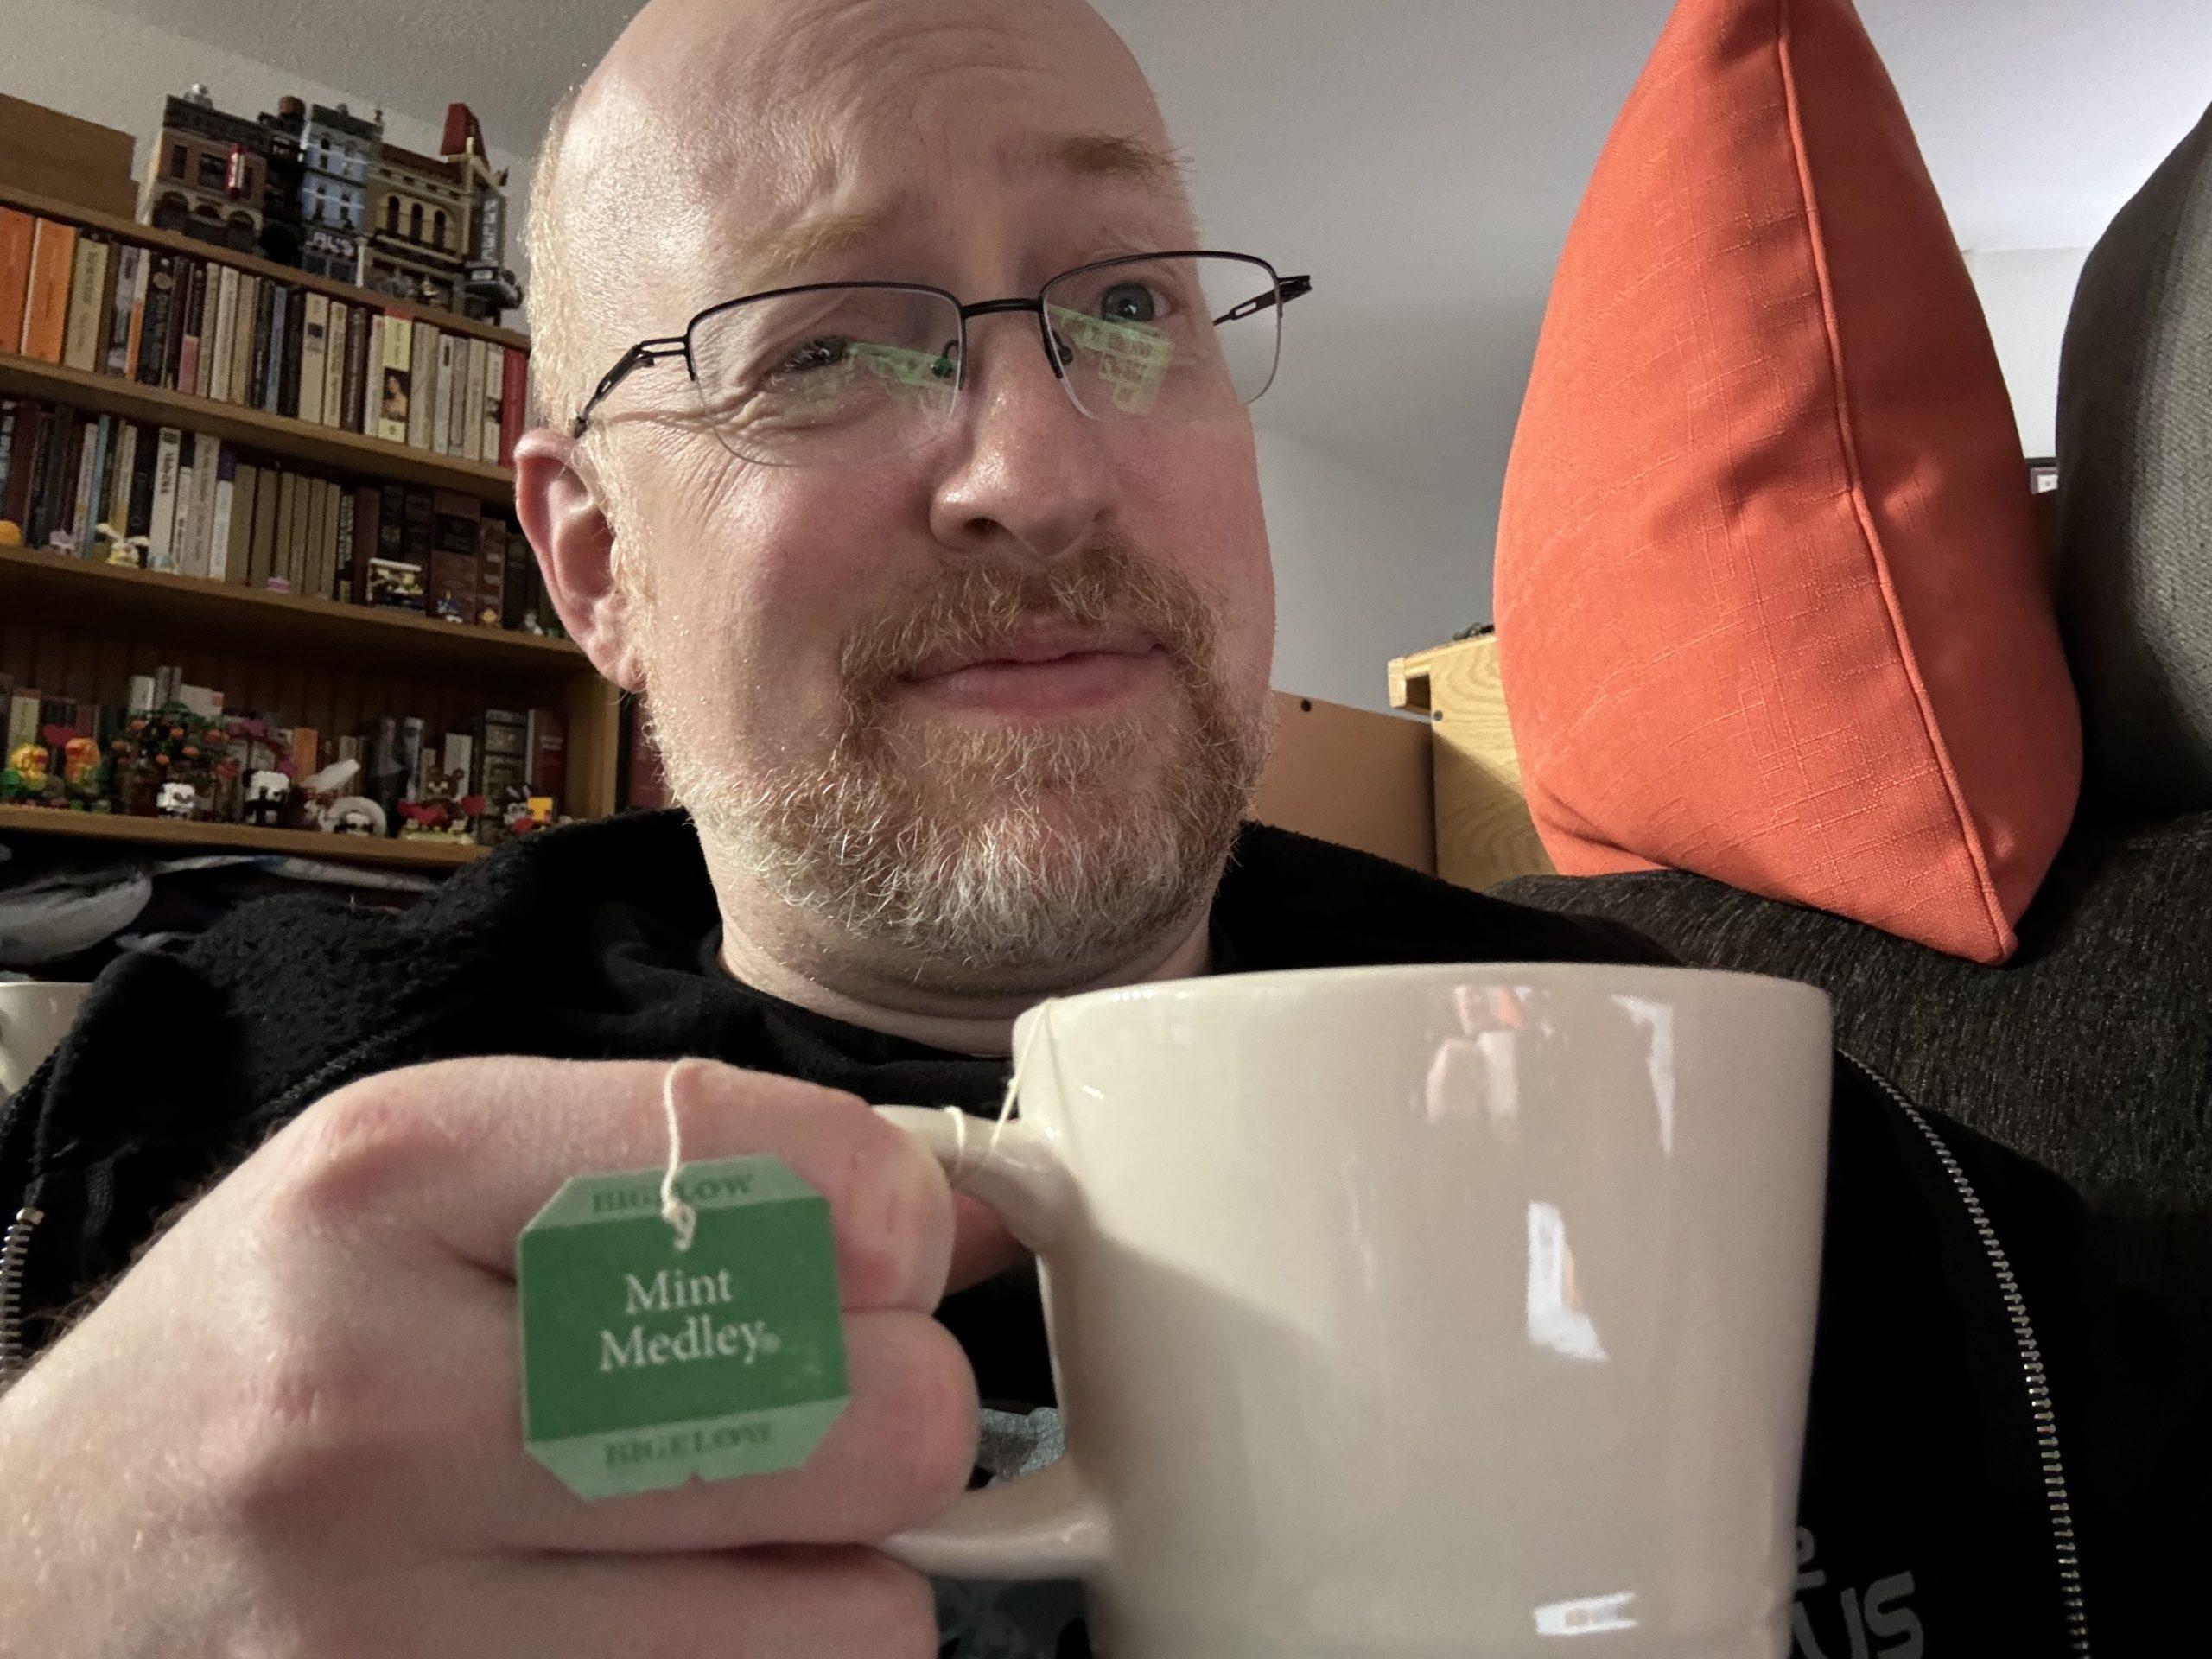 Me with a sad expression, holding a mug of Mint Medley tea.